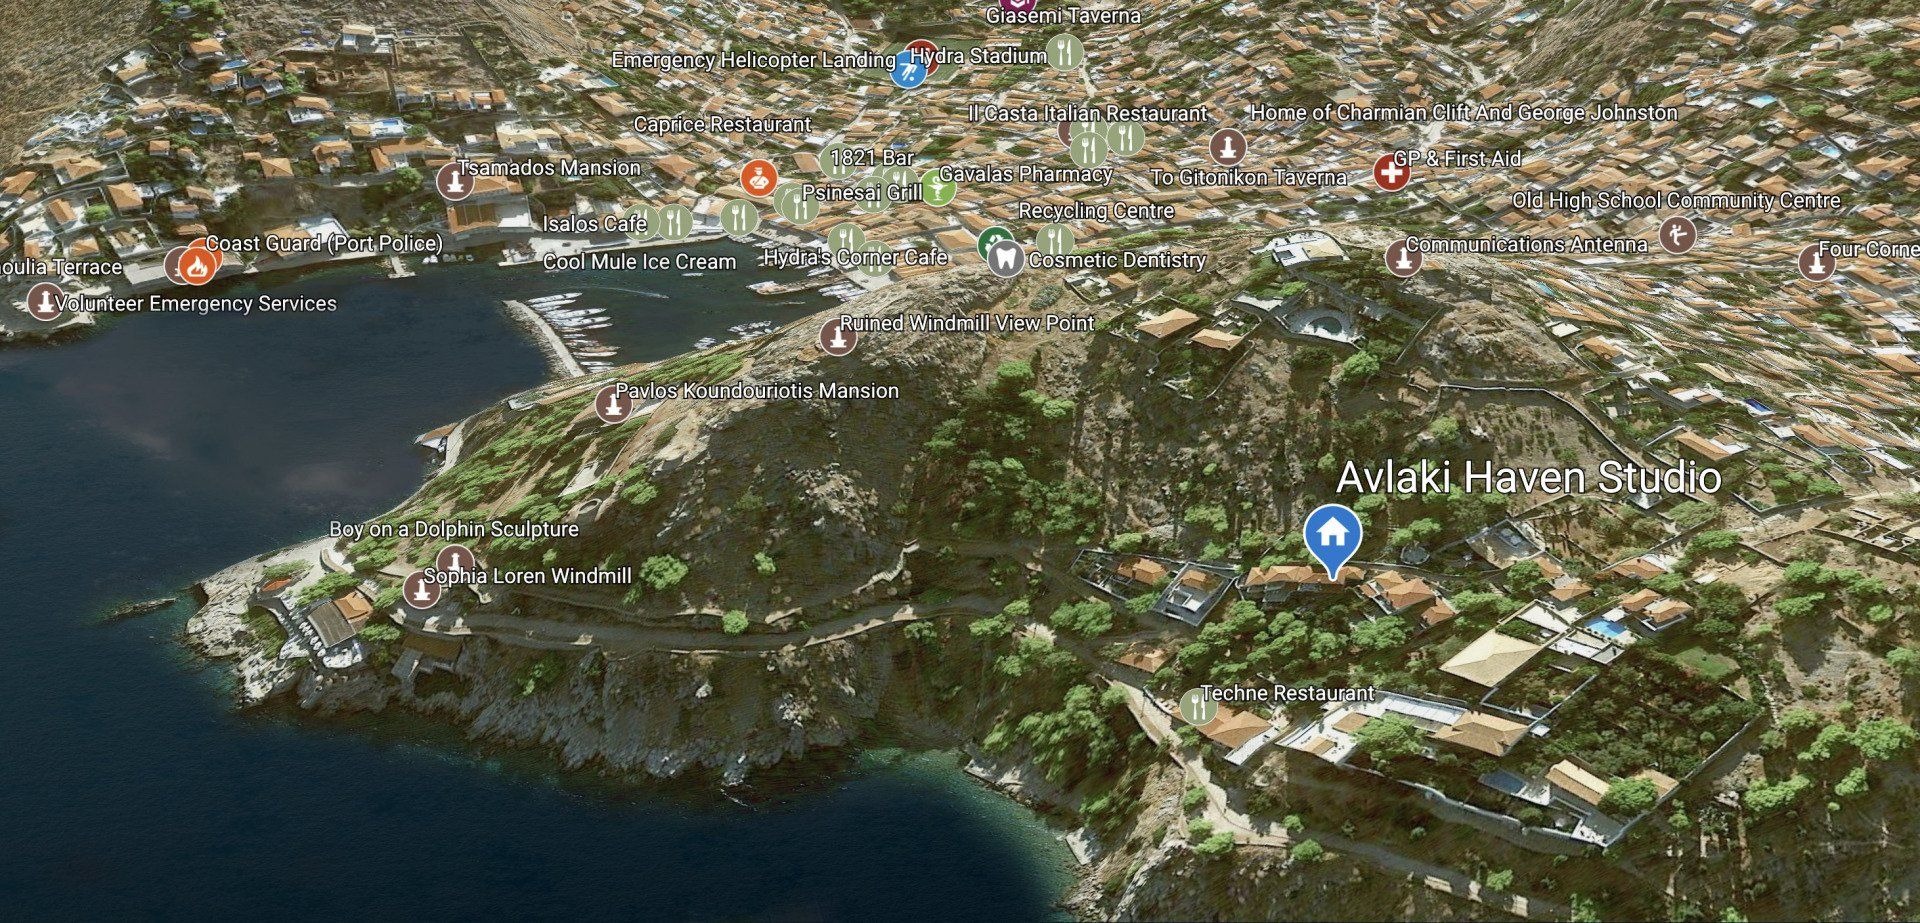 Location Map for Avlaki Haven House on Hydra Island Greece